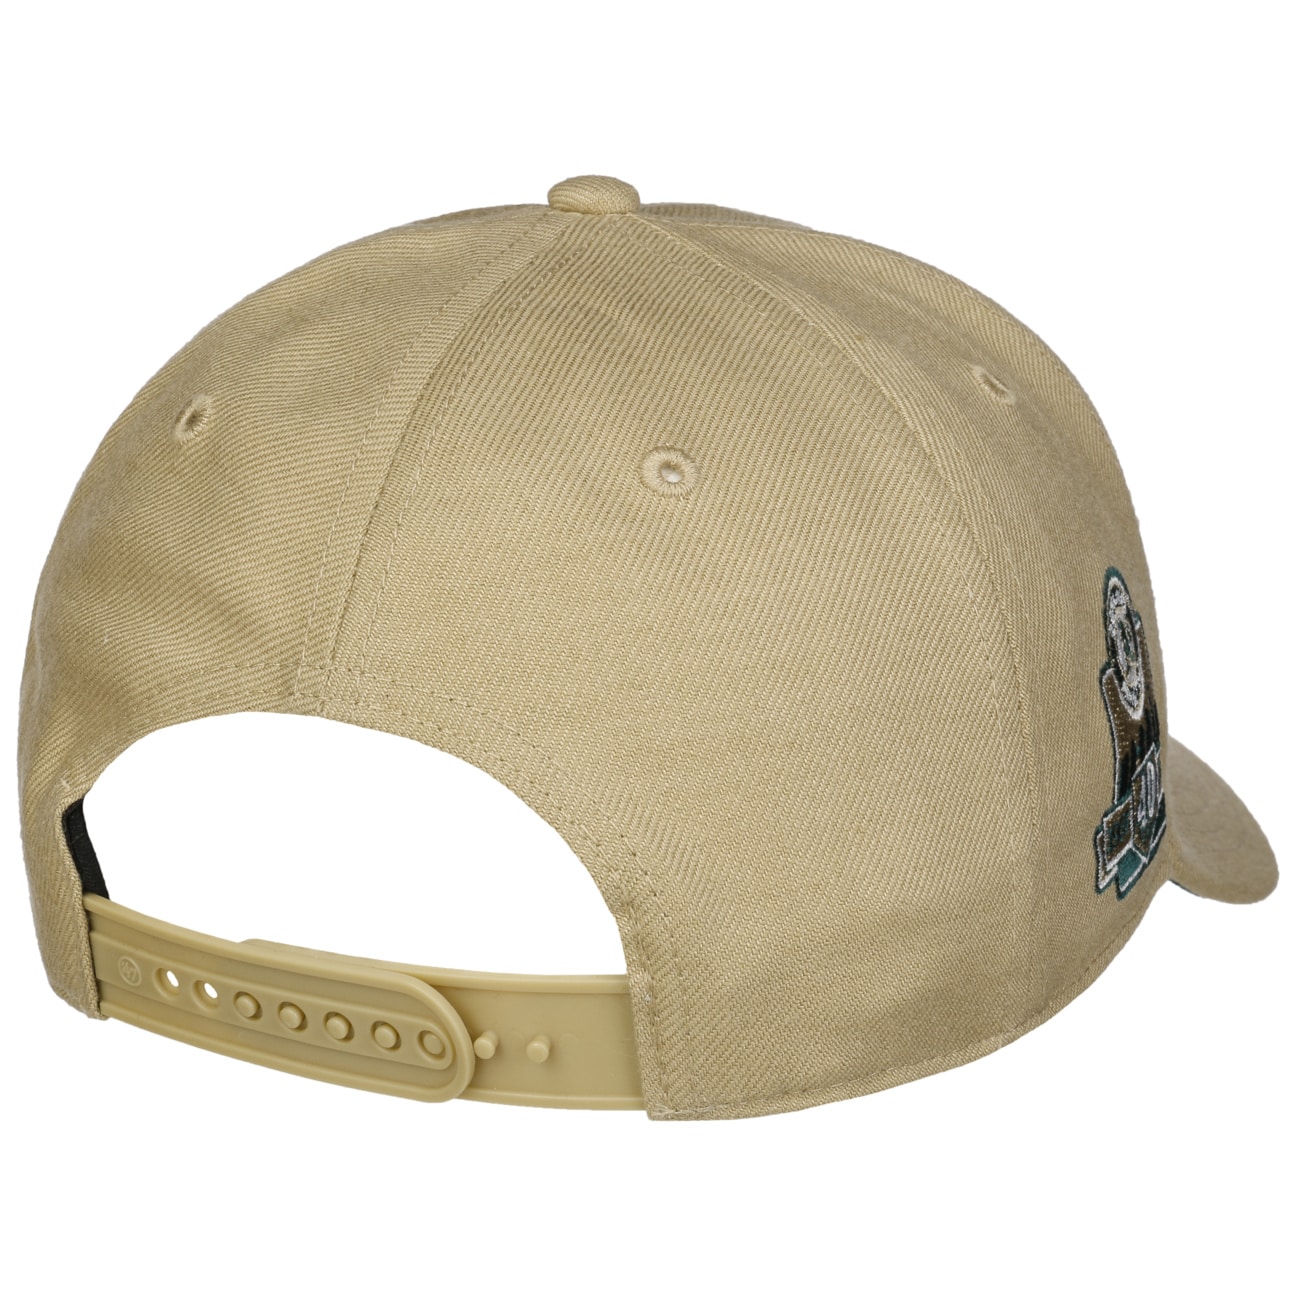 47 Brand Men's '47 Brand Camo Milwaukee Brewers Trucker Snapback Hat